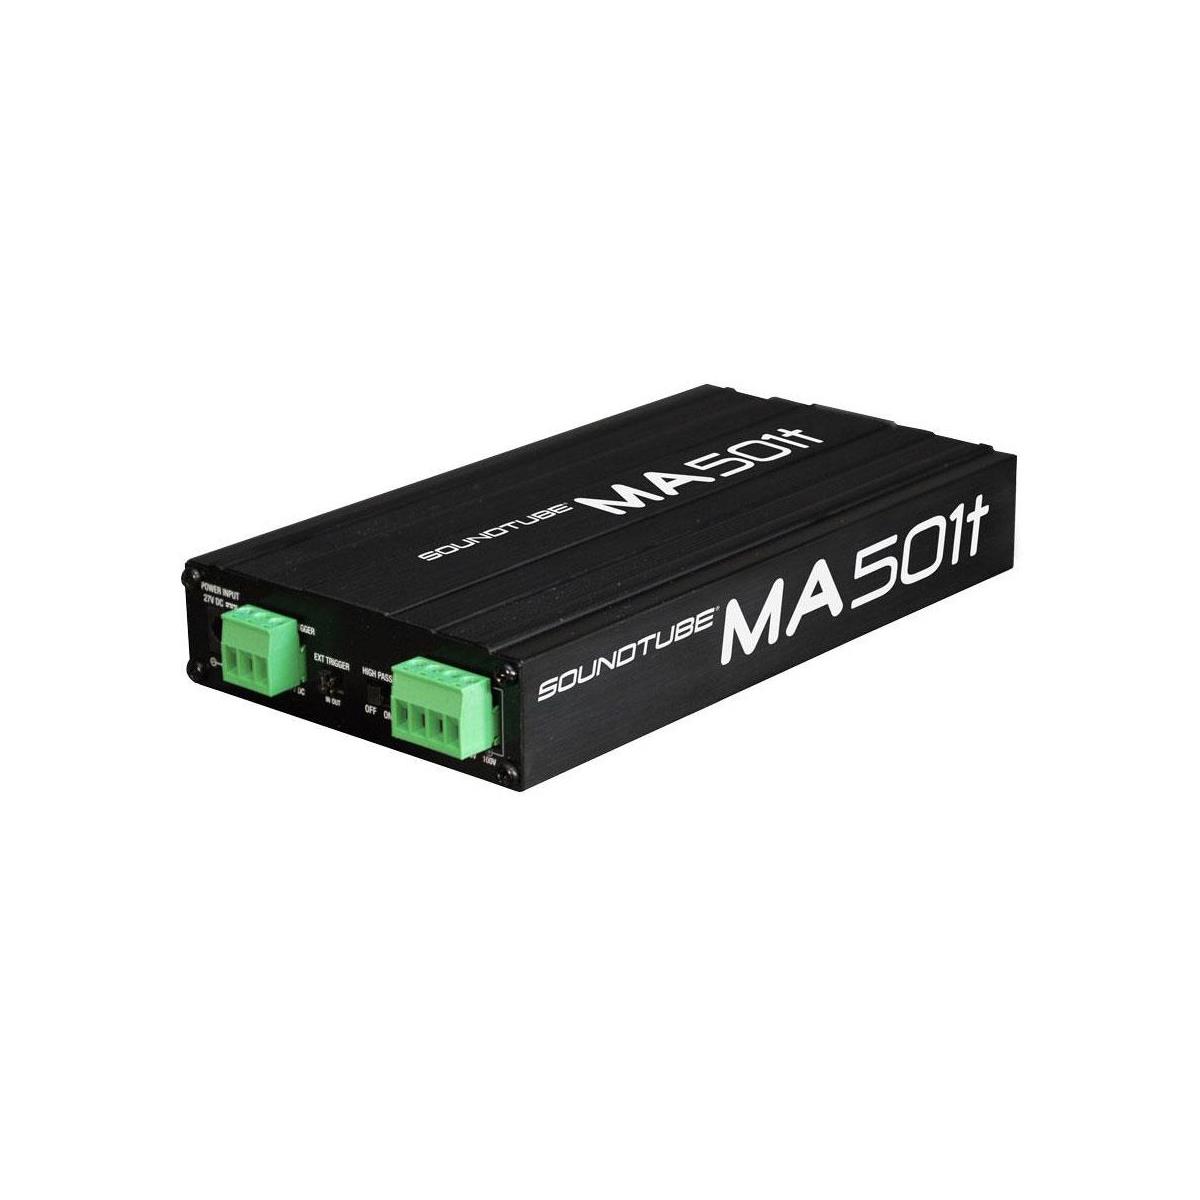 Image of SoundTube MA501t 50W Mini Amplifier